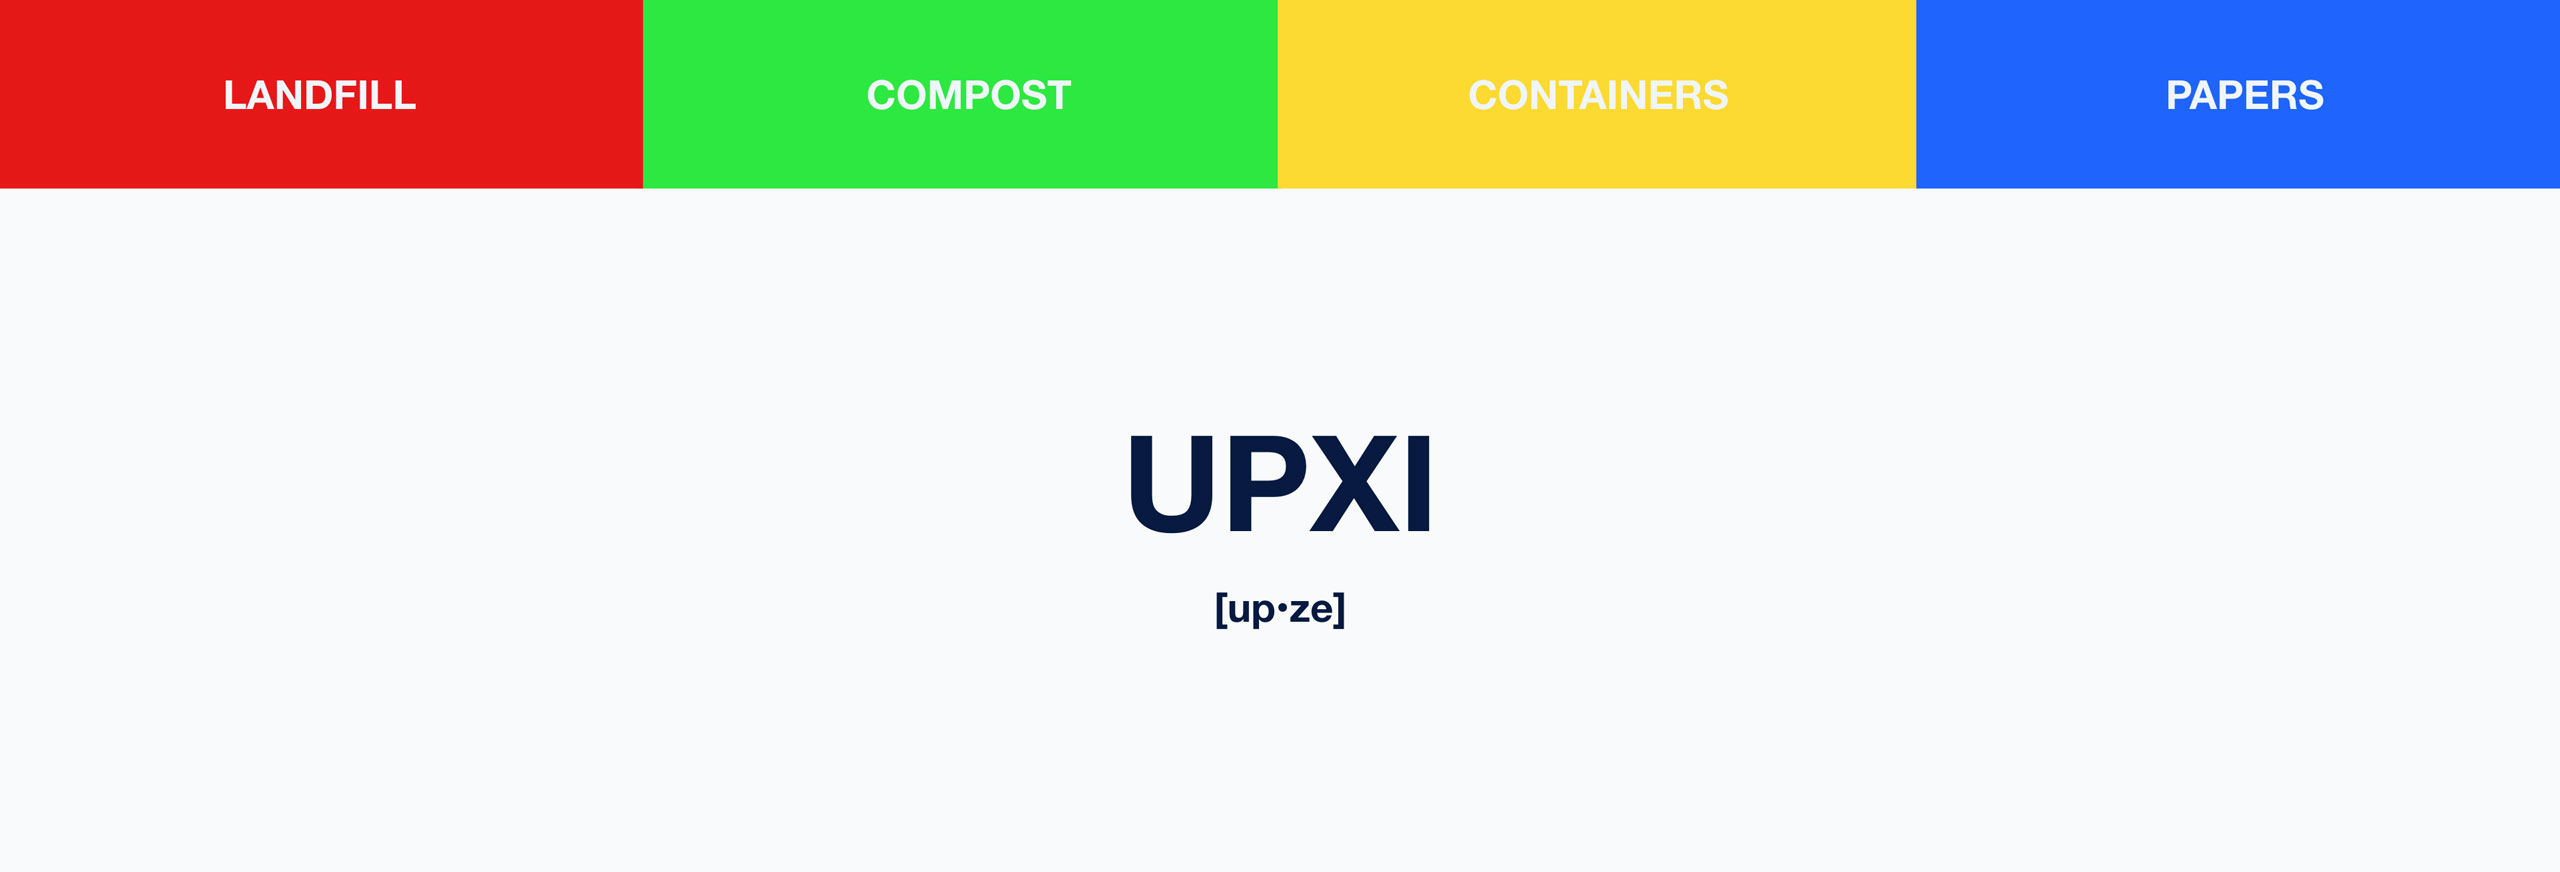 I-upxi-draft-1-copy